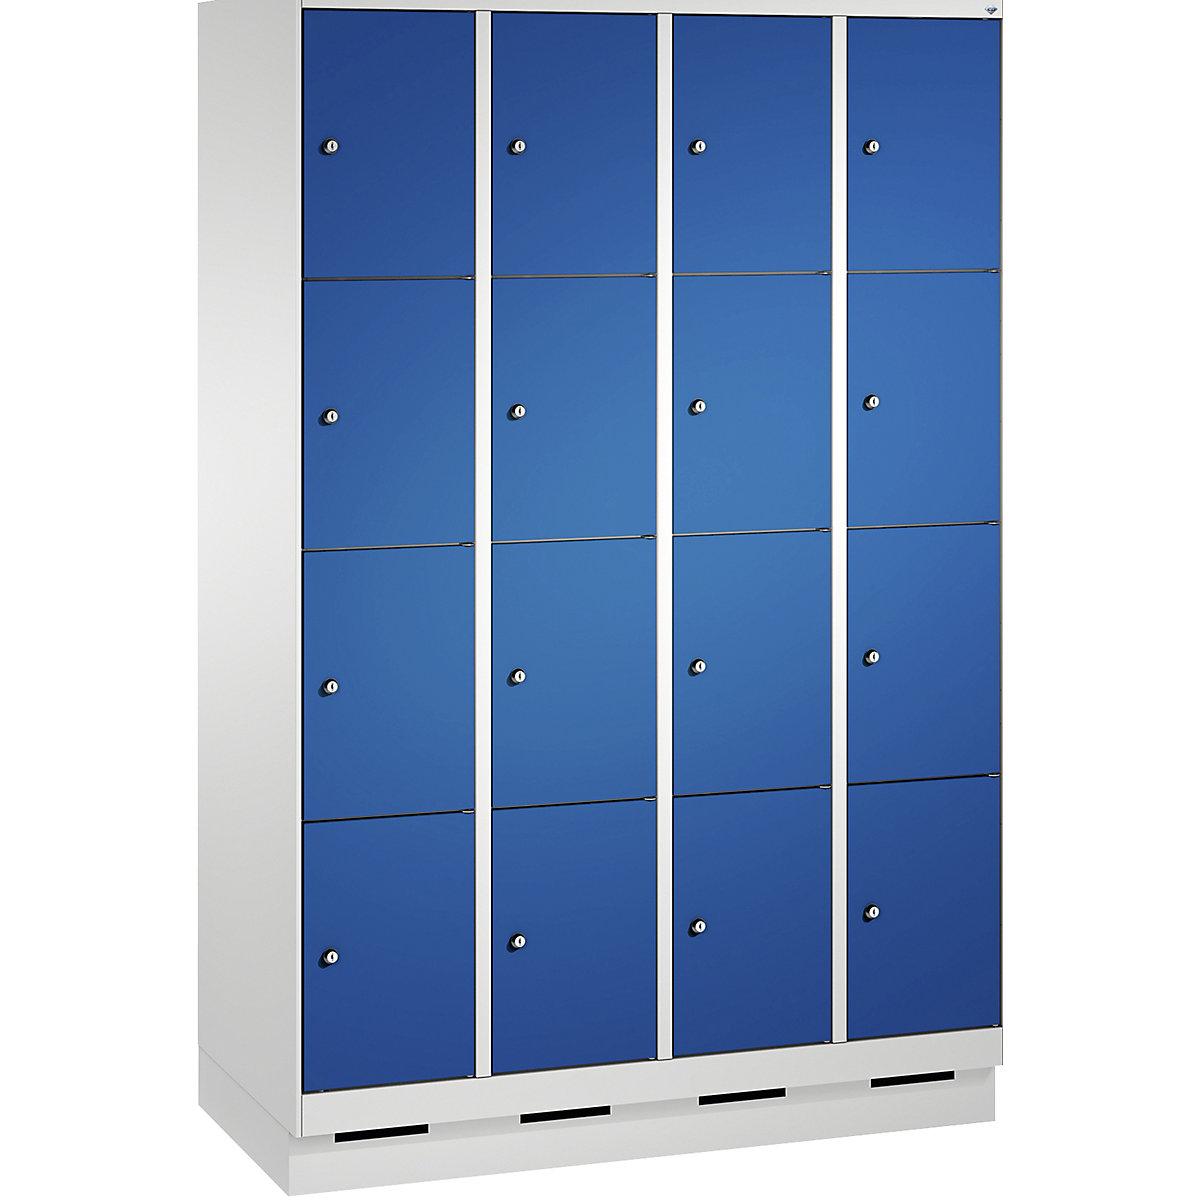 EVOLO locker unit, with plinth – C+P, 4 compartments, 4 shelf compartments each, compartment width 300 mm, light grey / gentian blue